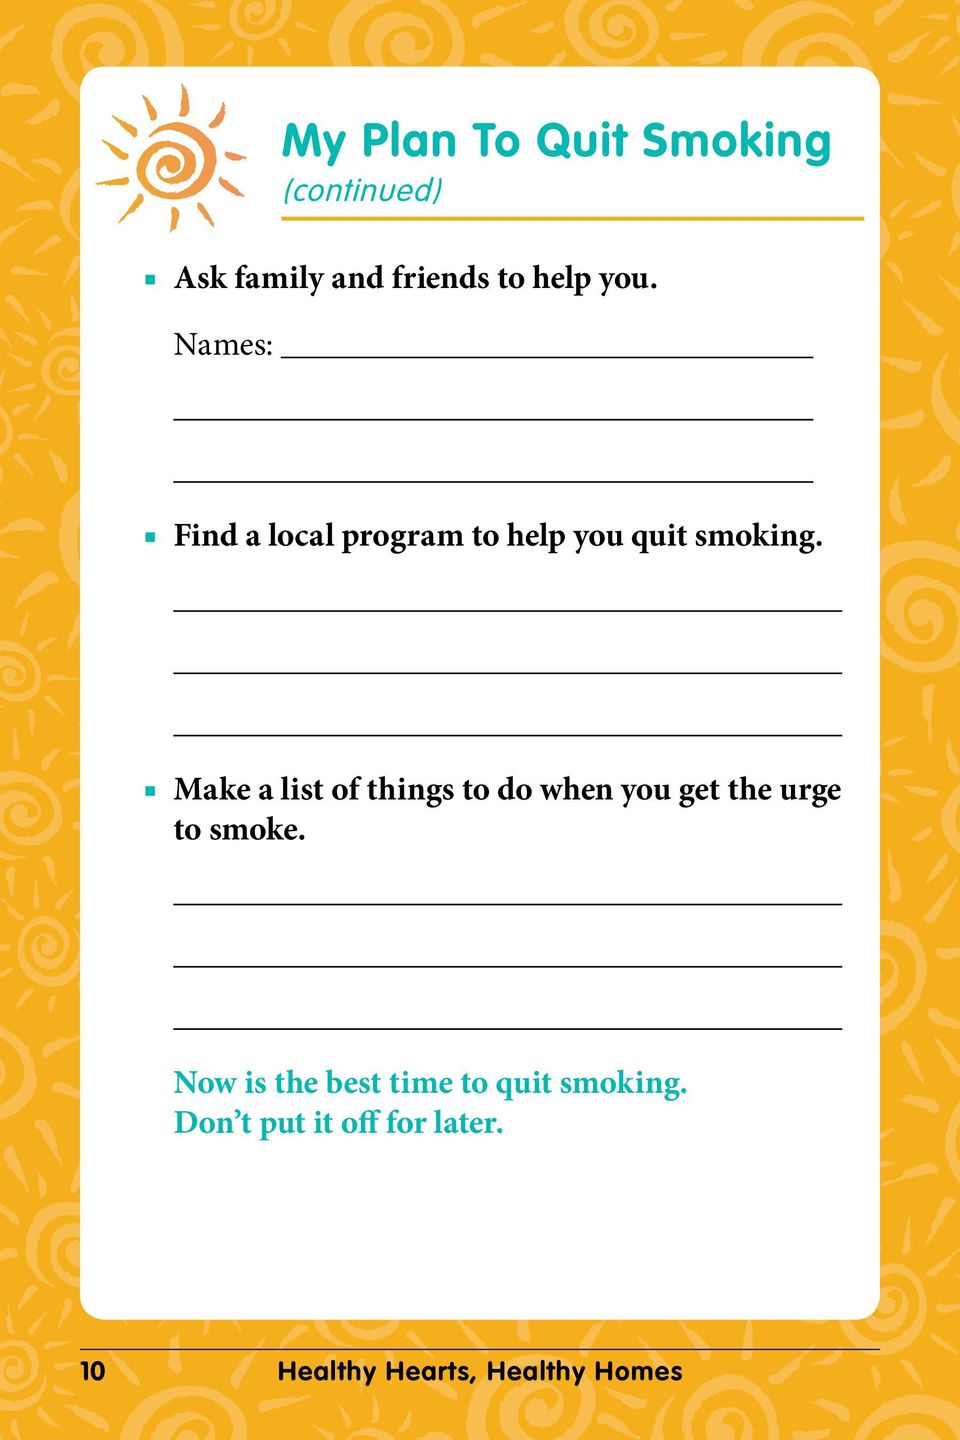 help you quit smoking.